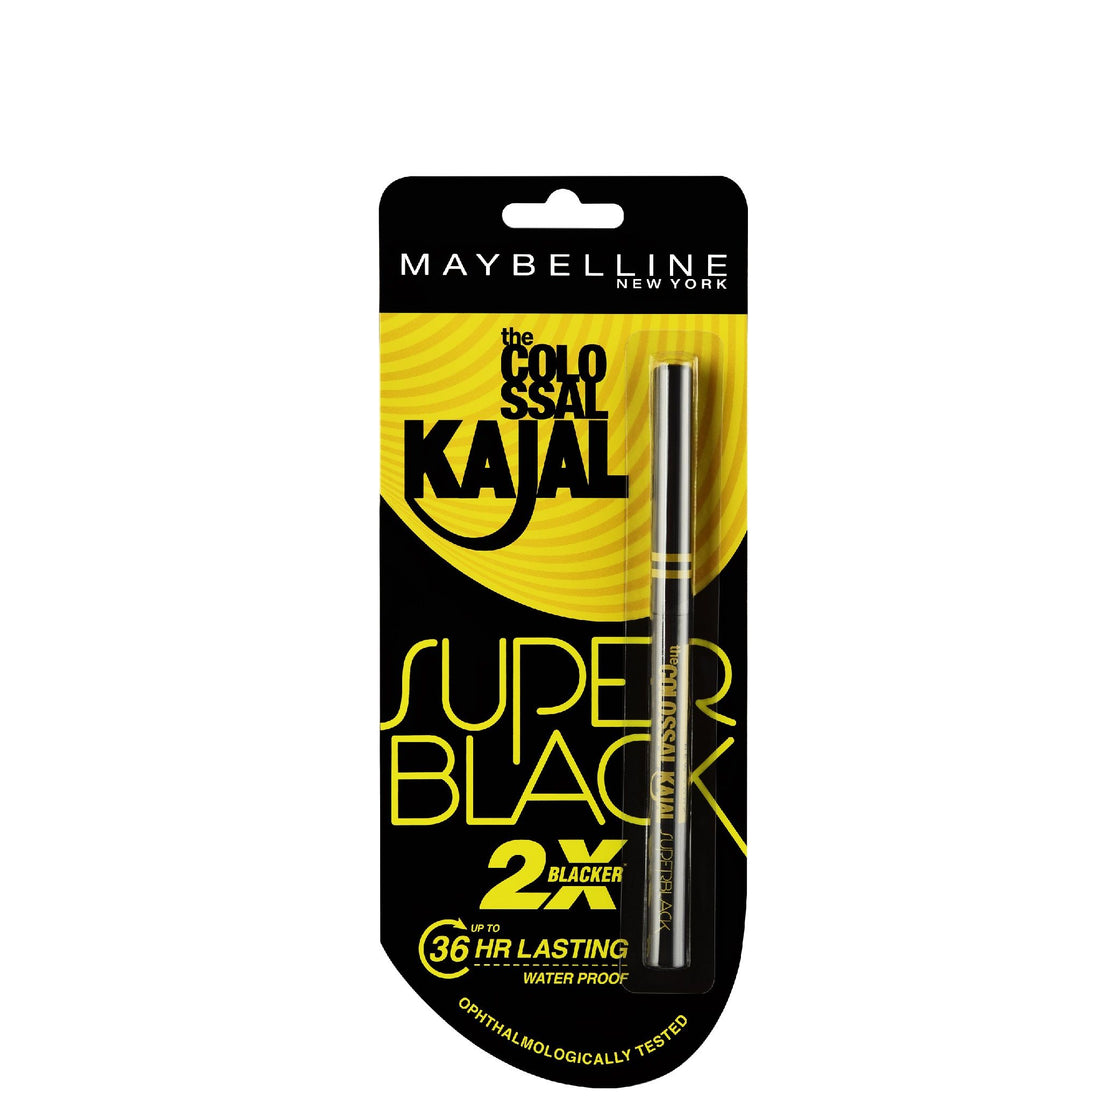 Maybelline New York Colossal Kajal Super Black - Pack Of 2